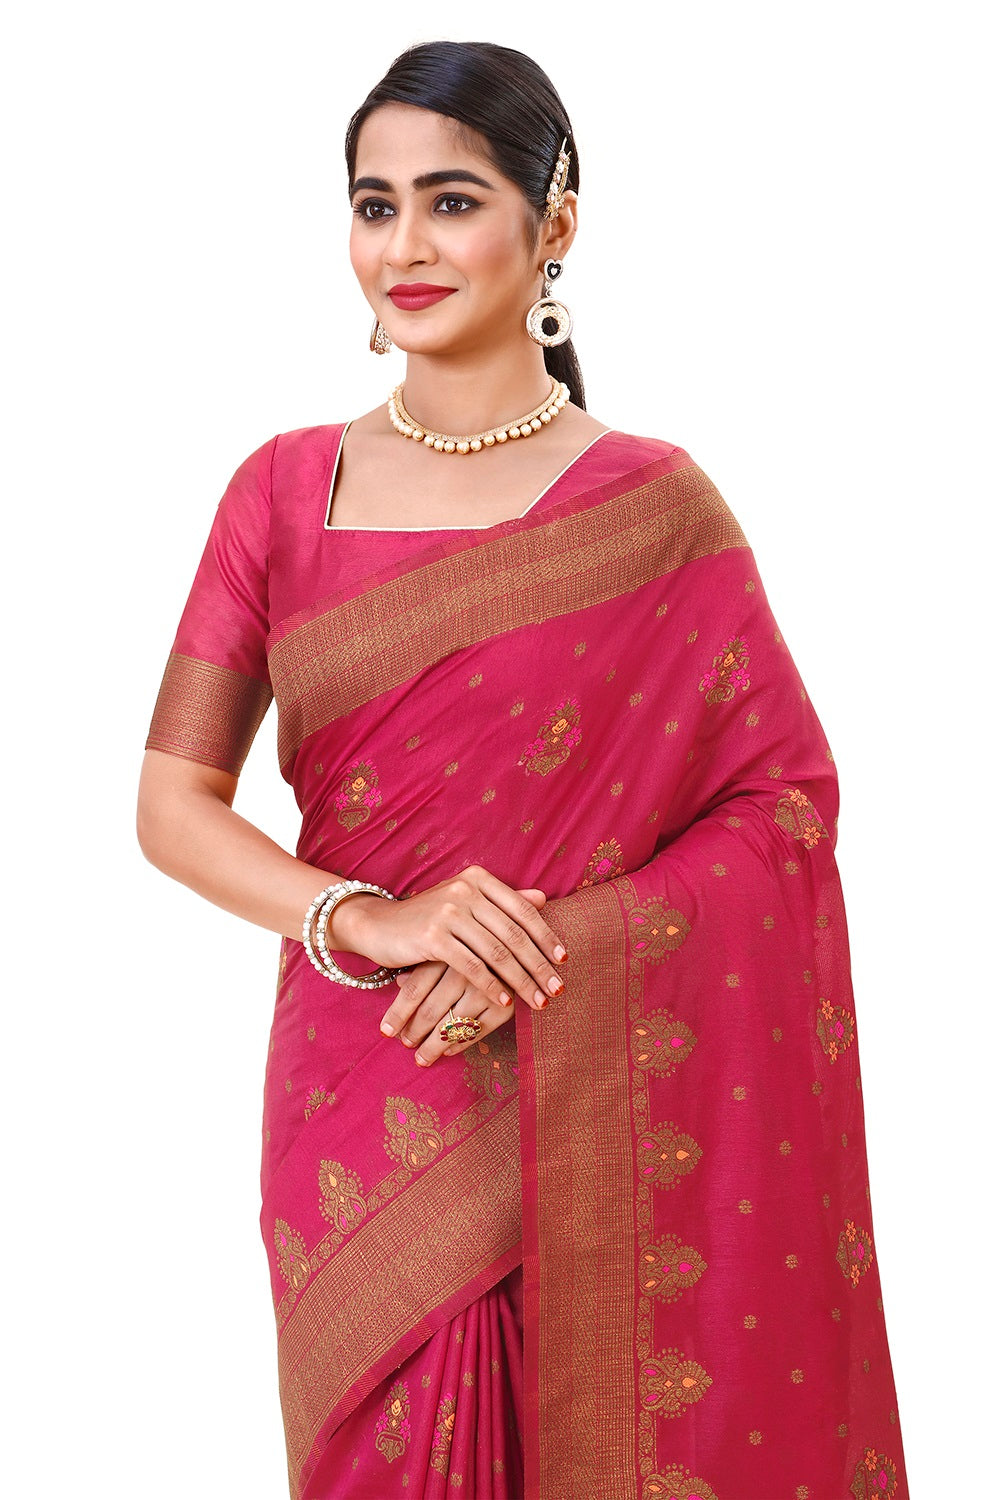 Trendy Pink color designer saree at affordable rate